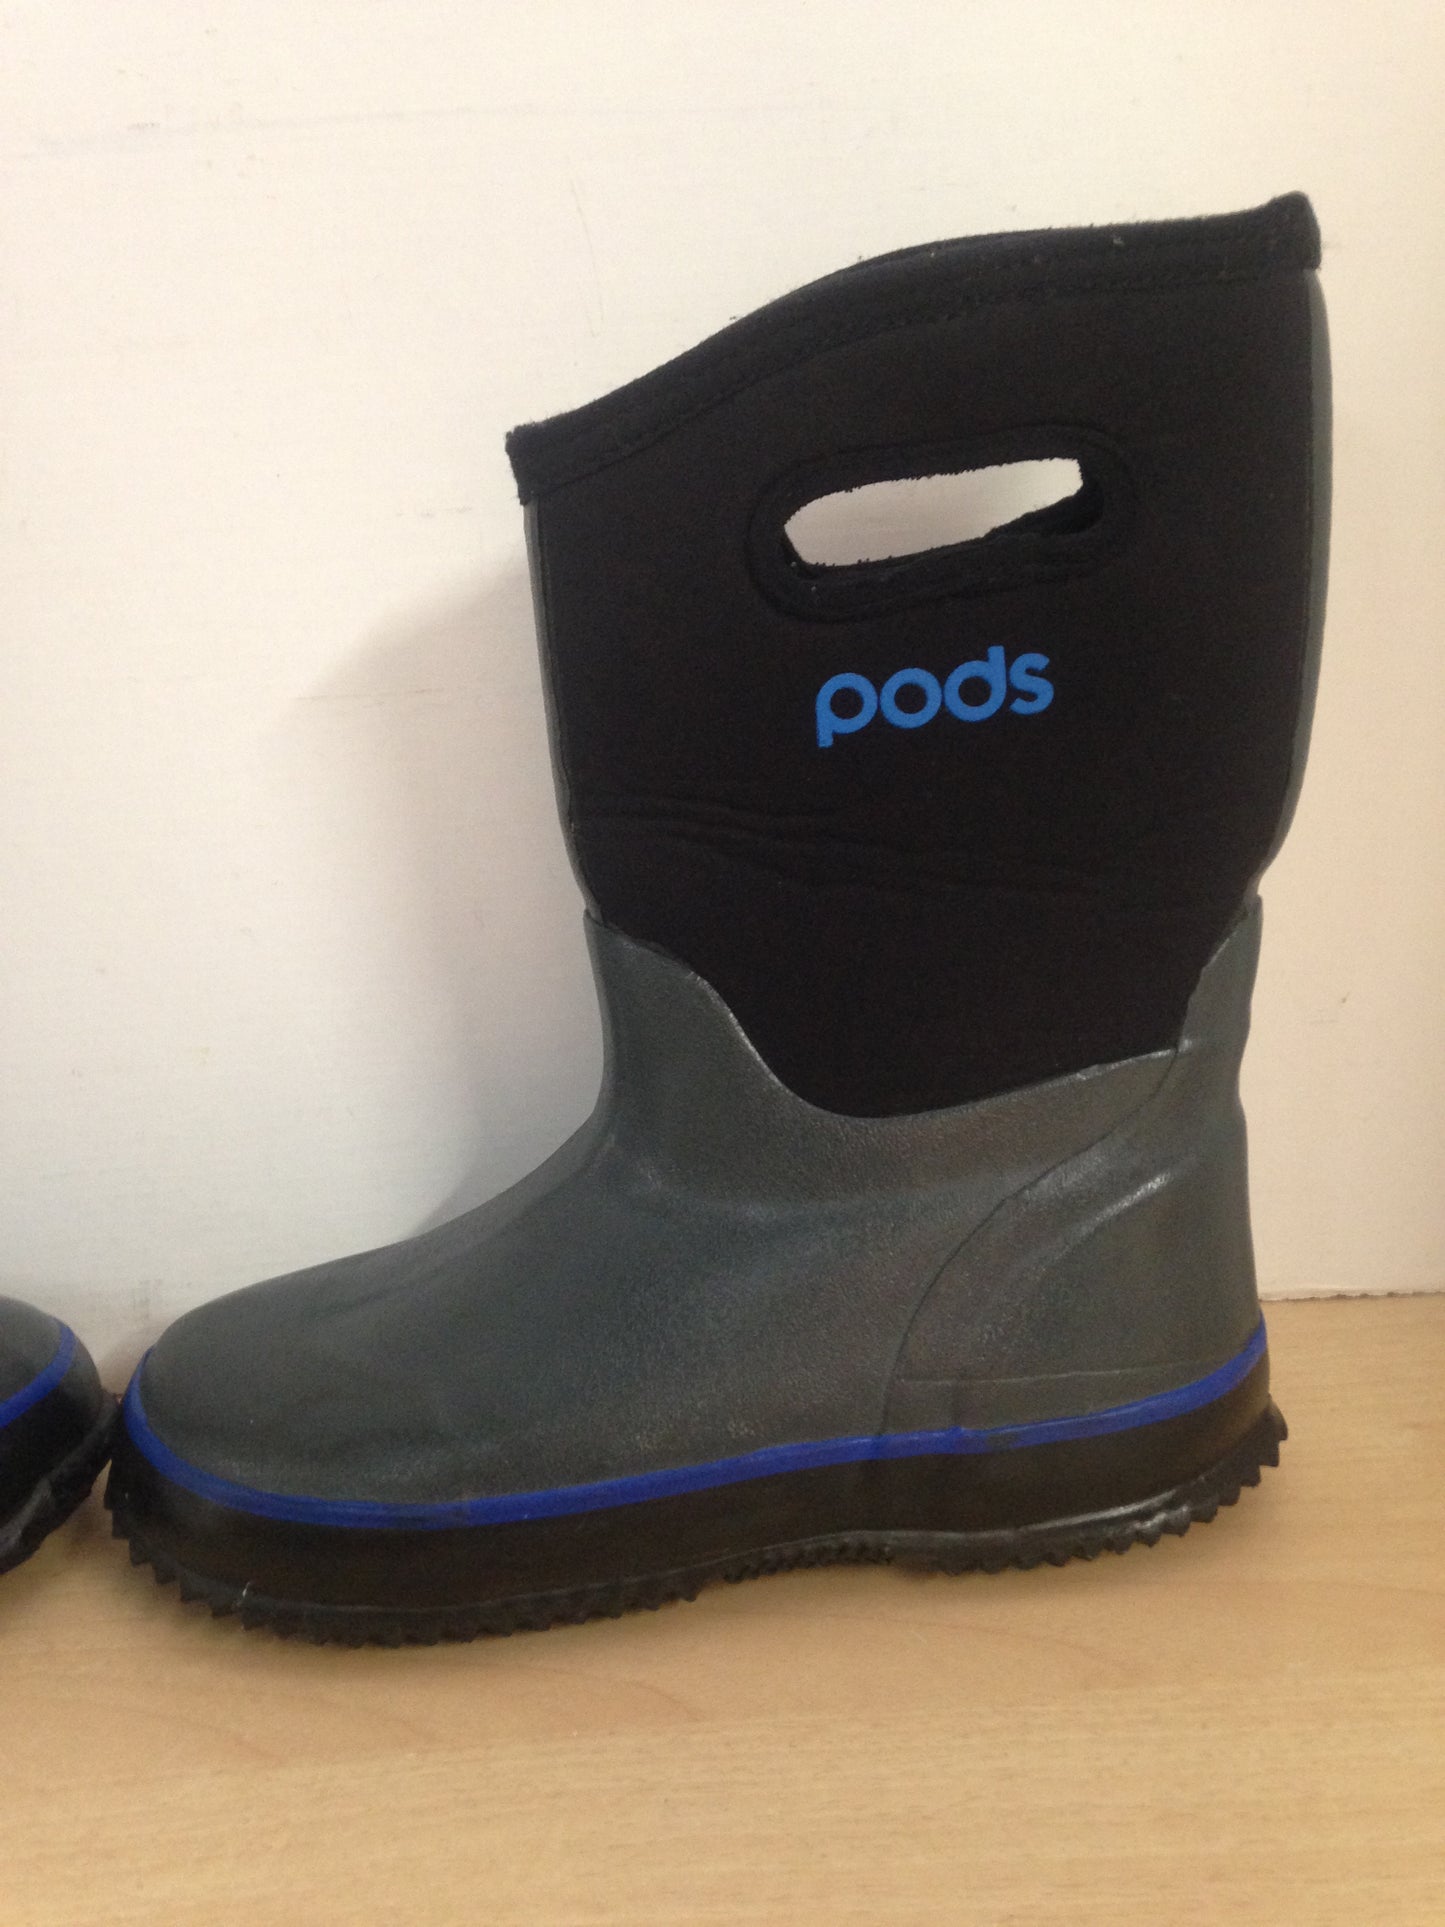 Bogs Style Child Size 3 Pods Black Grey Neoprene Rubber Rain Winter Snow Waterproof Boots